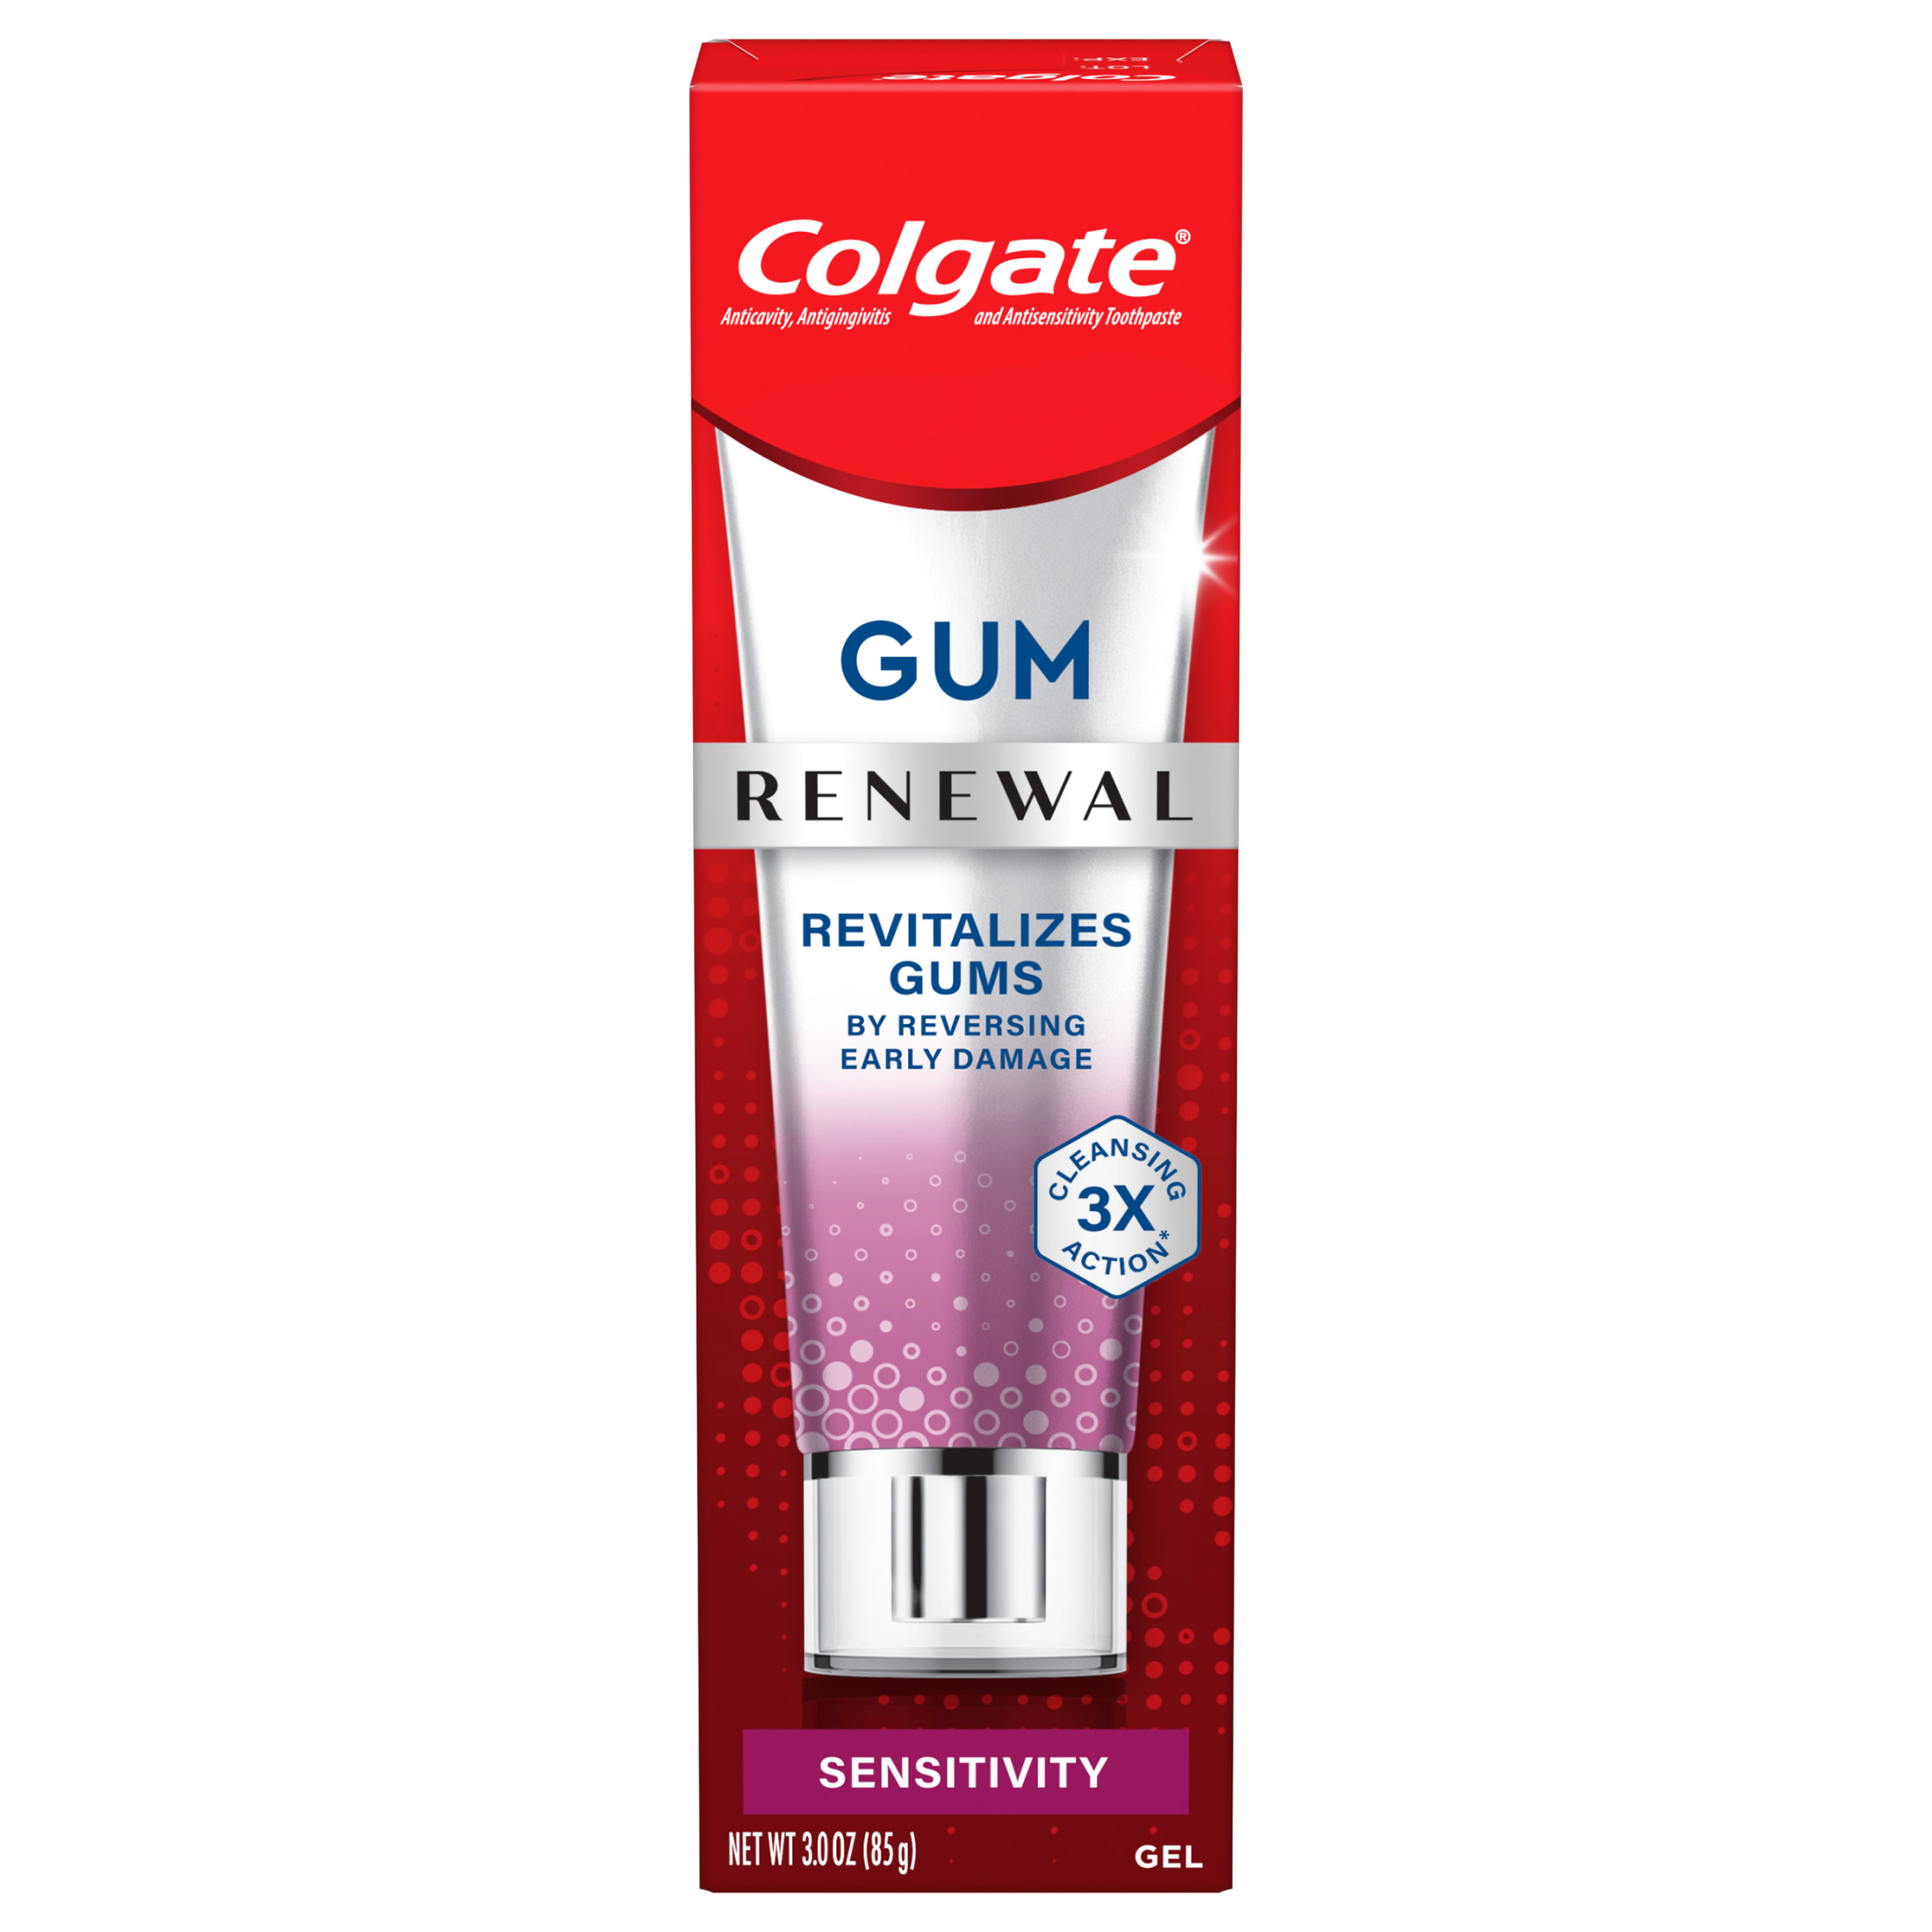 Colgate Renewal Sensitivity Gum Toothpaste Gel, Mint, 3 OZ Tube - image 1 of 5